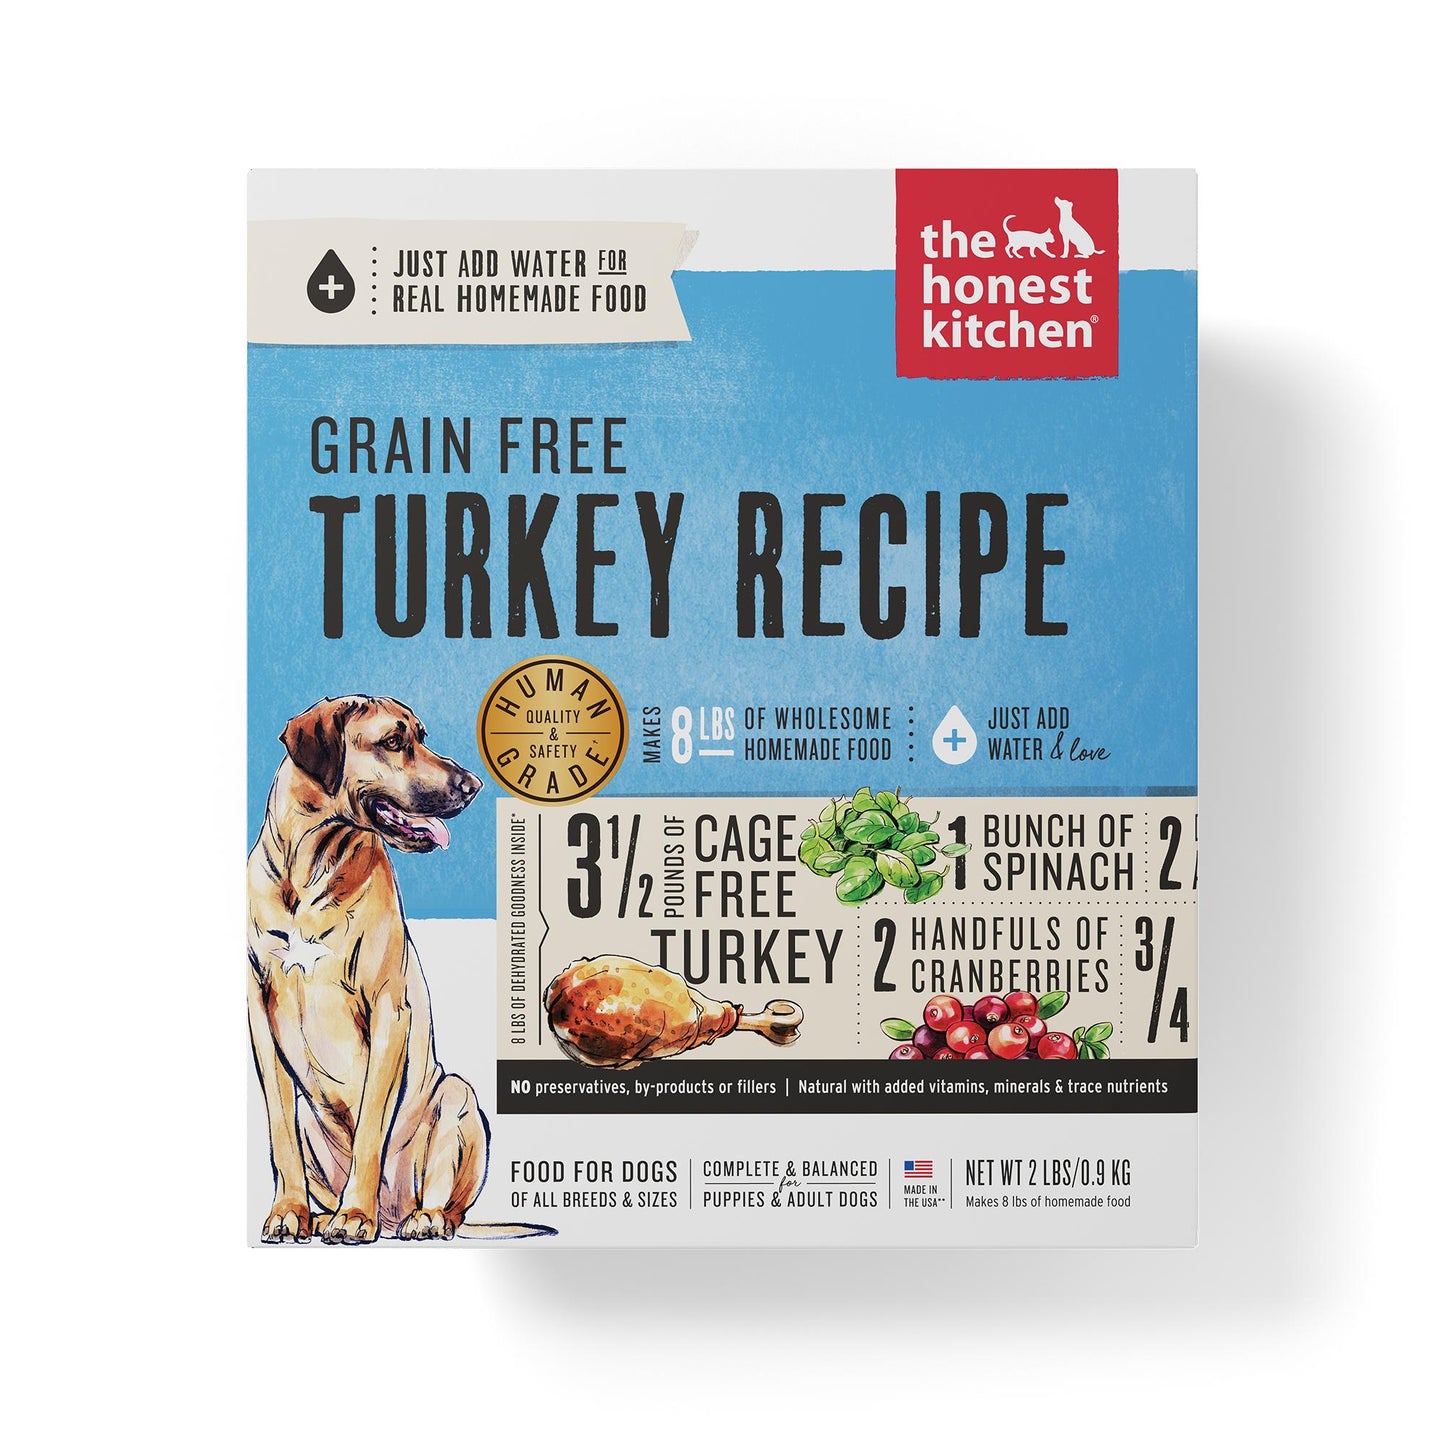 The Honest Kitchen Turkey Recipe Grain-Free Dehydrated Dog Food, 2-lb box